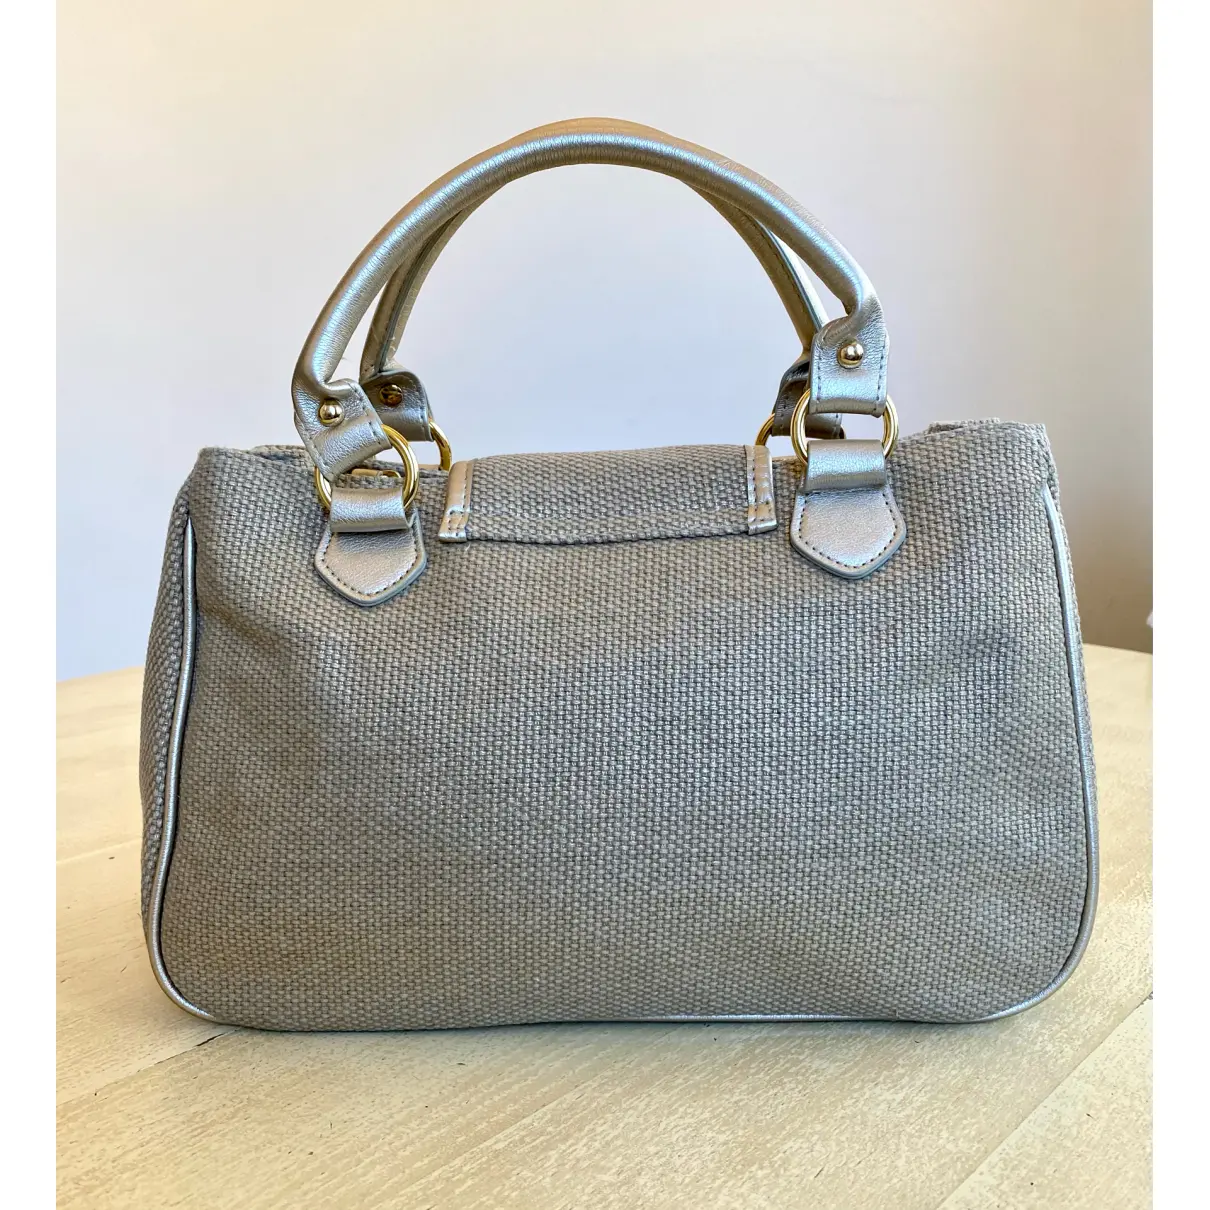 Buy Giorgio Armani Cloth handbag online